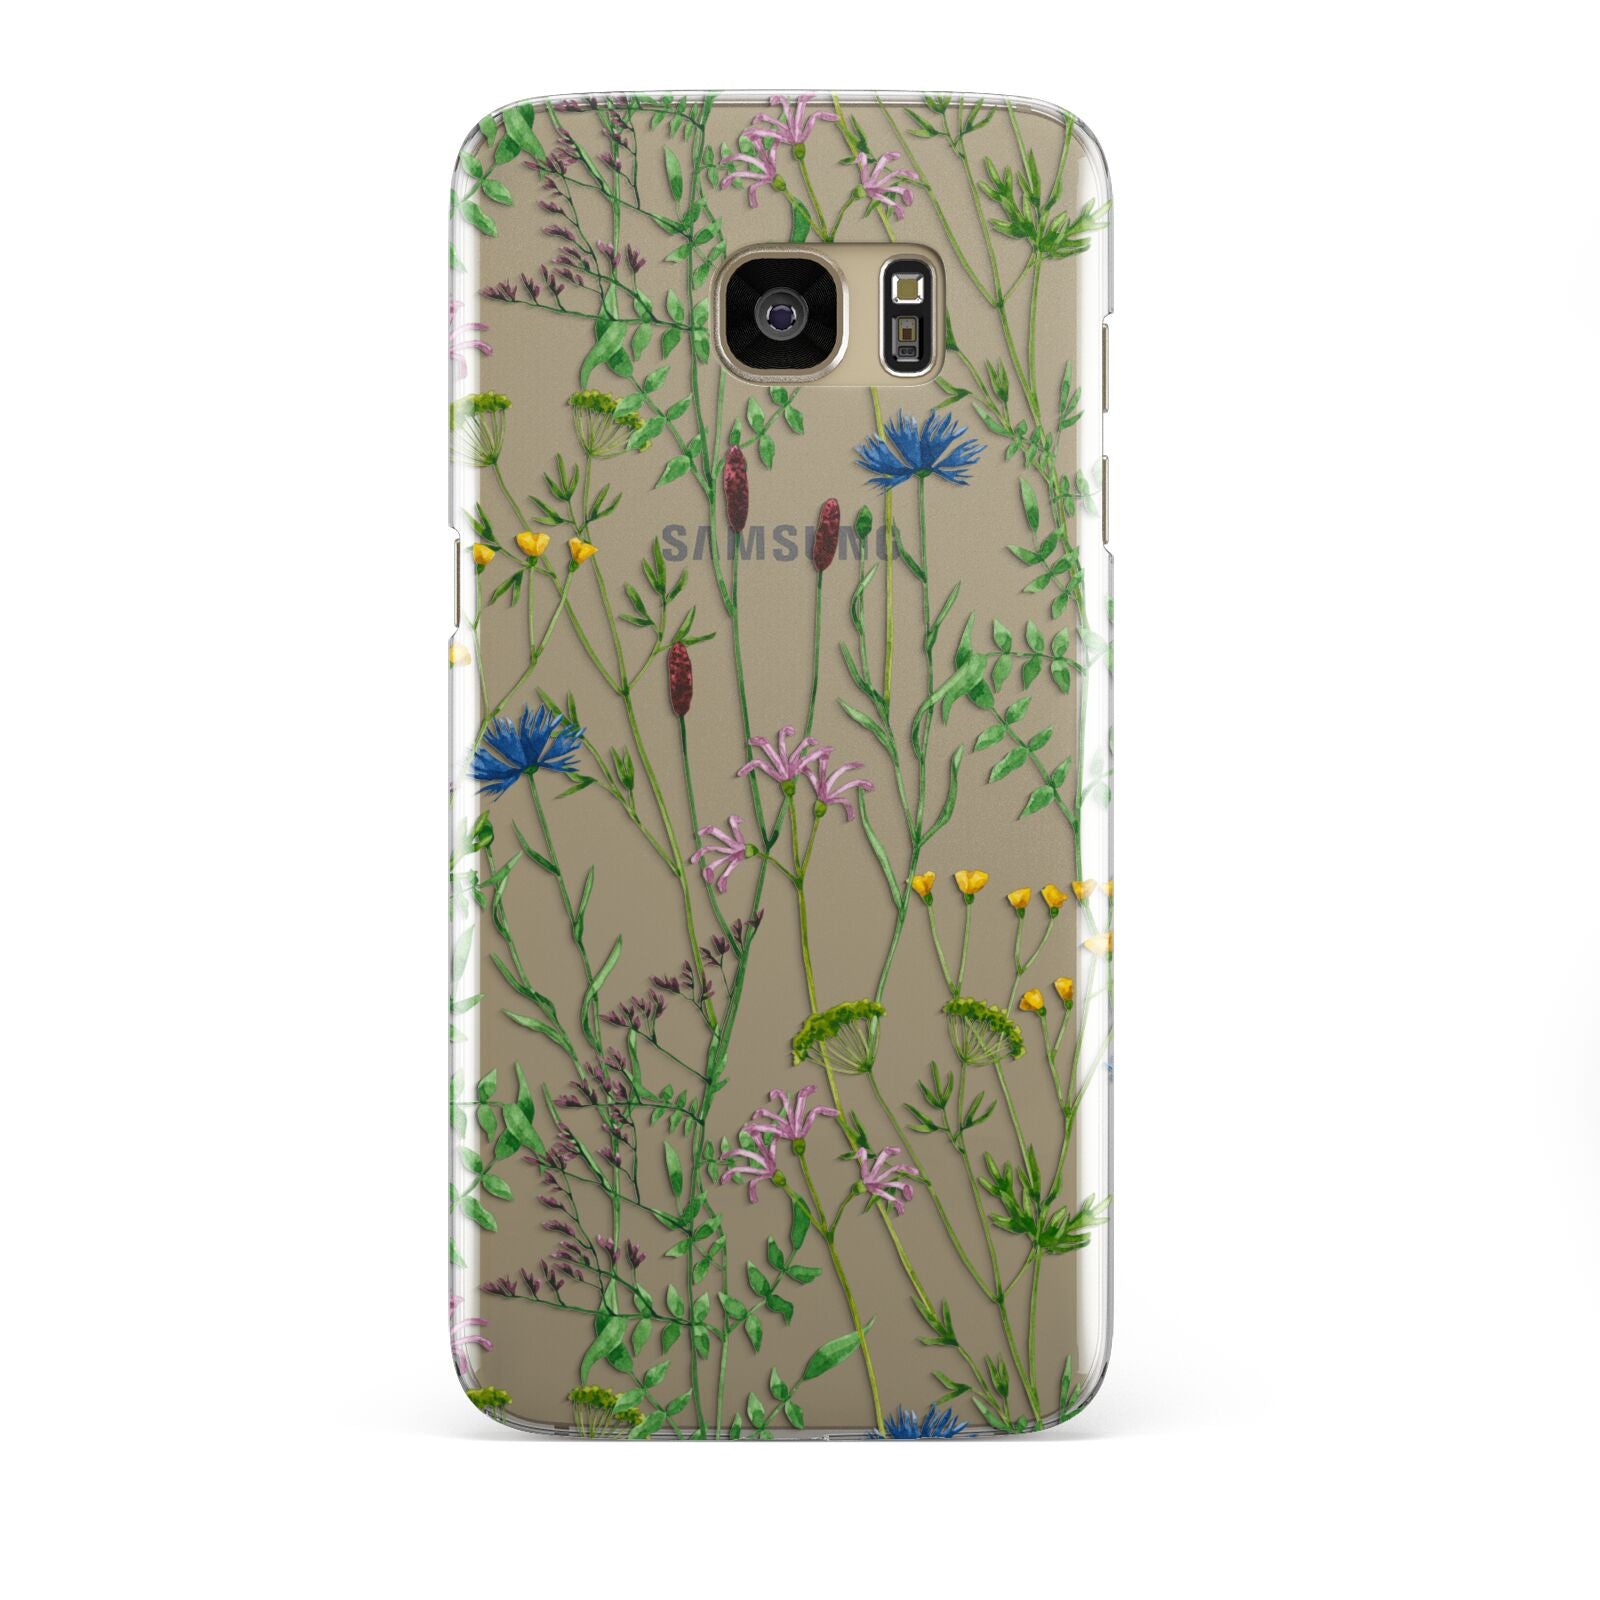 Wildflowers Samsung Galaxy S7 Edge Case